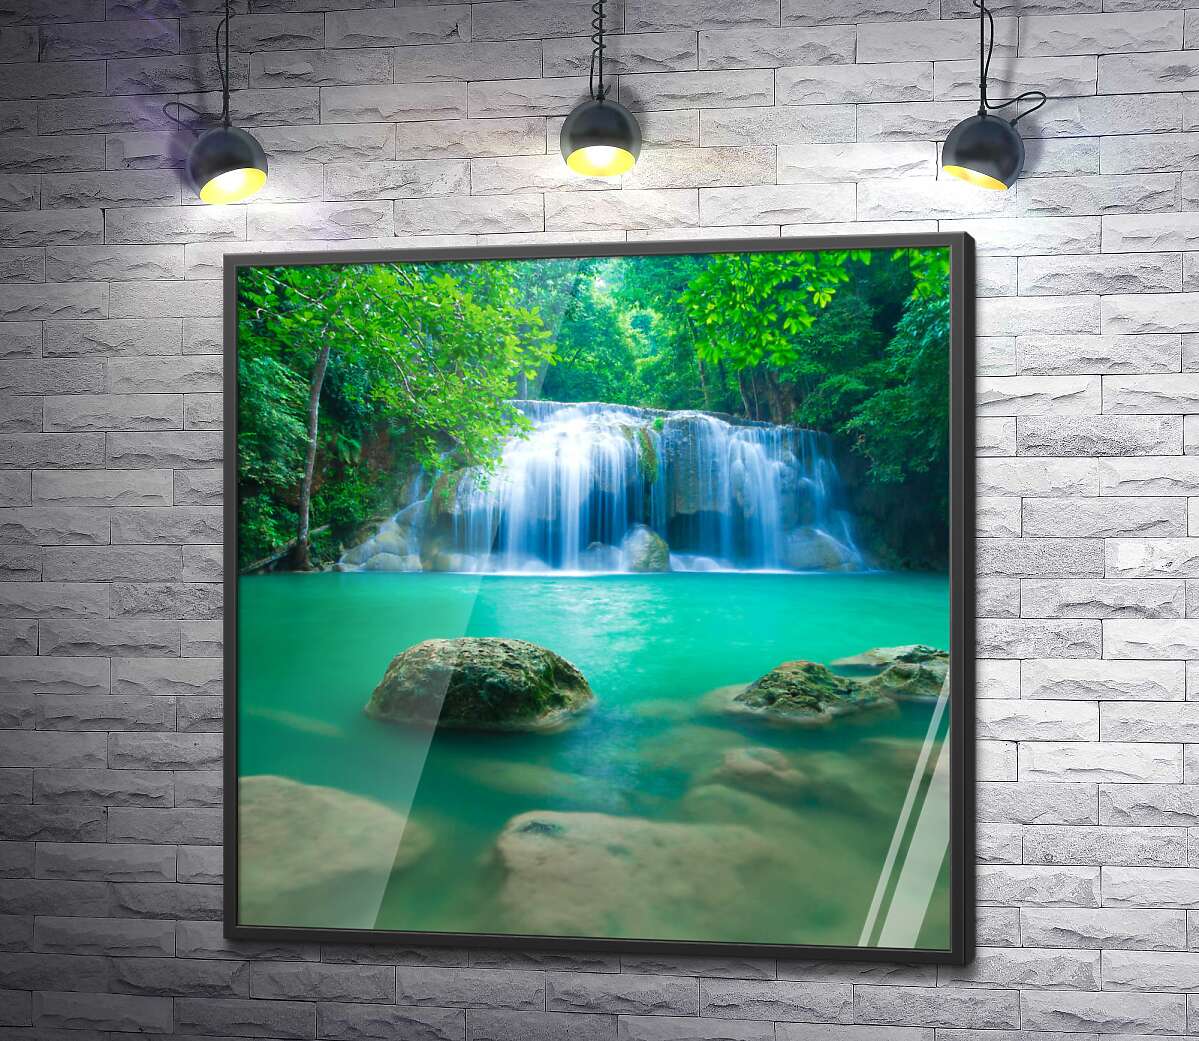 постер Бирюзовая вода водопада Эраван (Erawan falls)